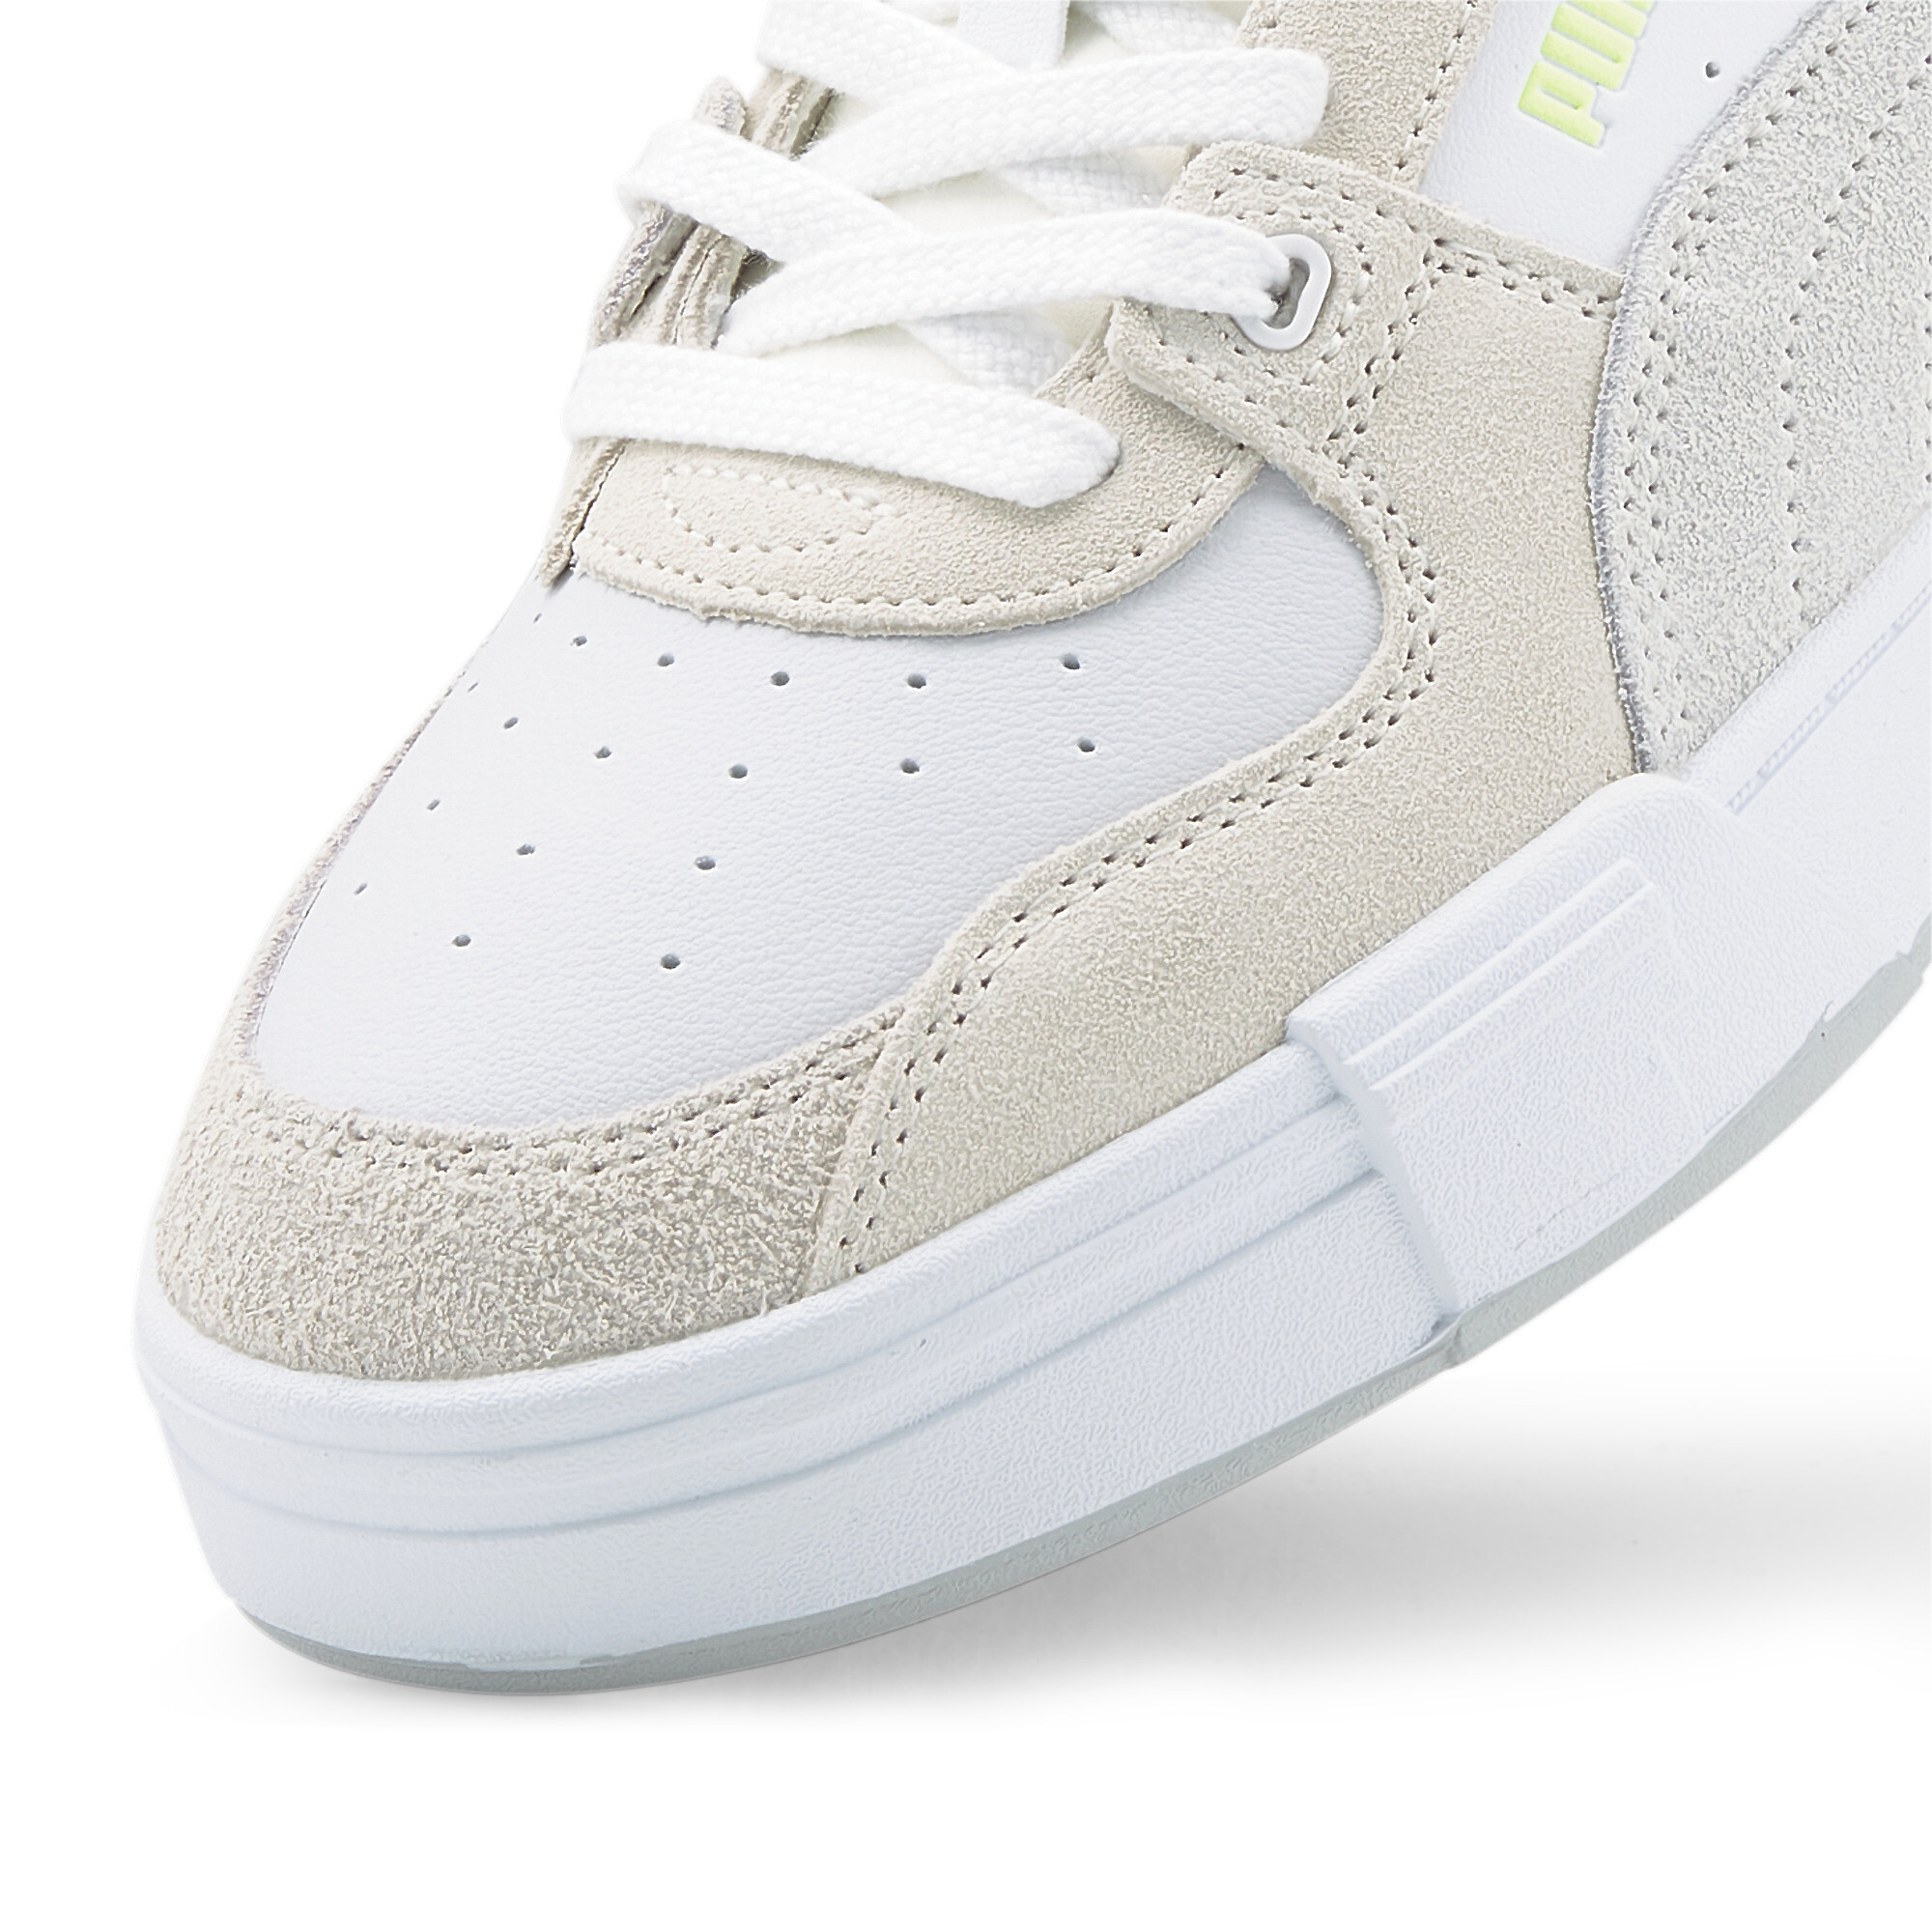 Men's Puma CA Pro Glitch Suede Sneakers, White, Size 48, Shoes